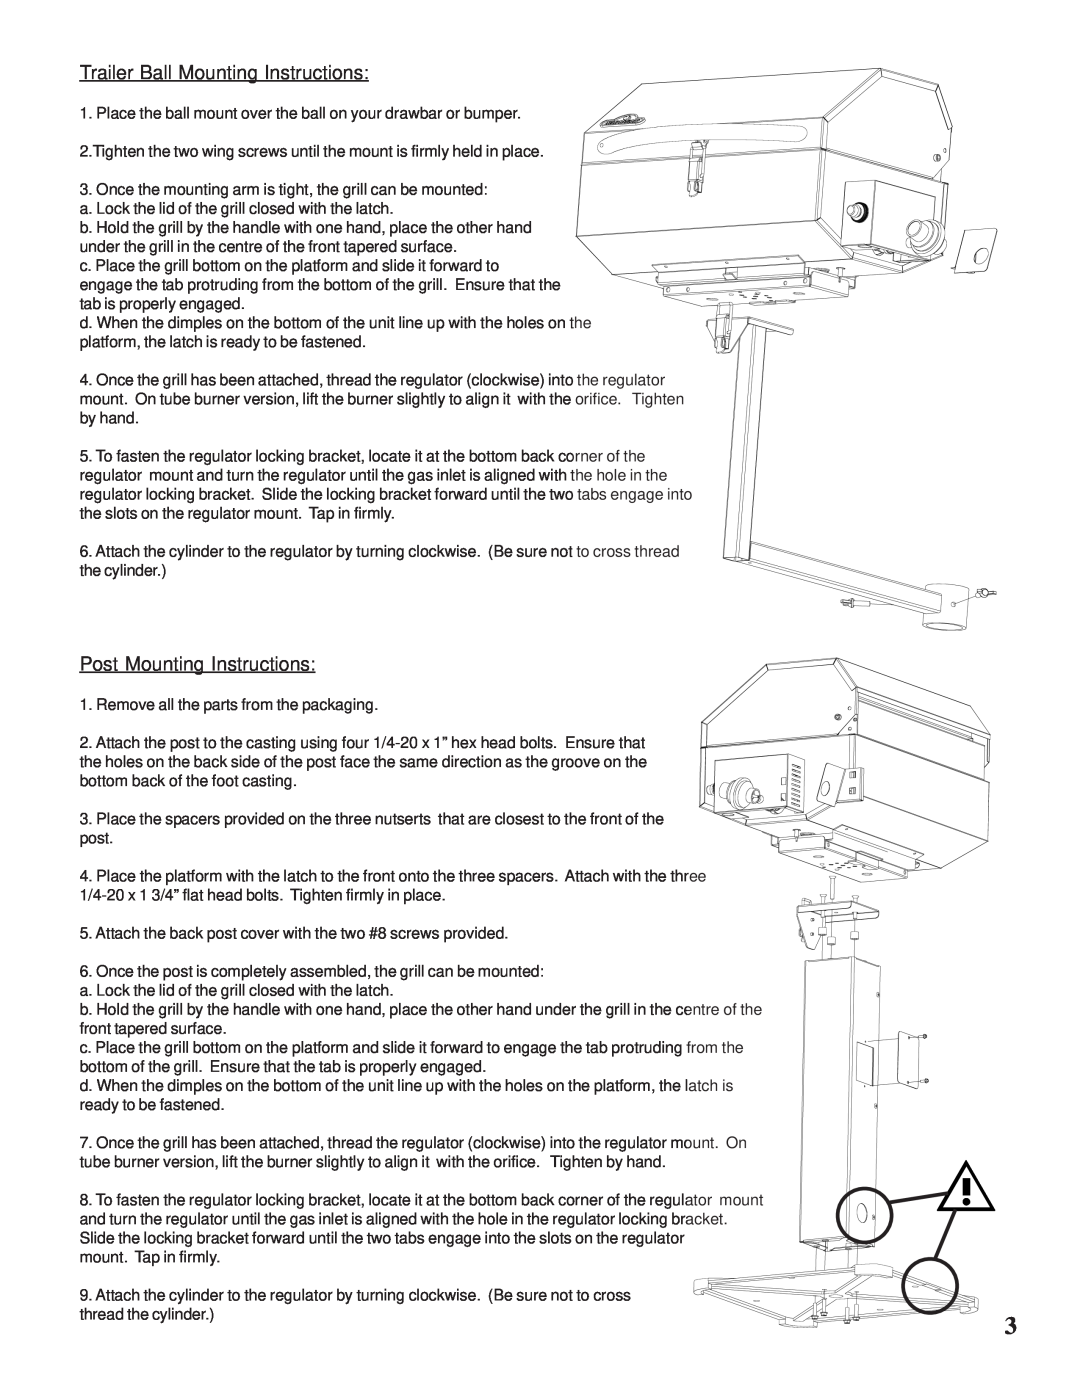 Napoleon Grills N415-0117 manual Trailer Ball Mounting Instructions, Post Mounting Instructions 